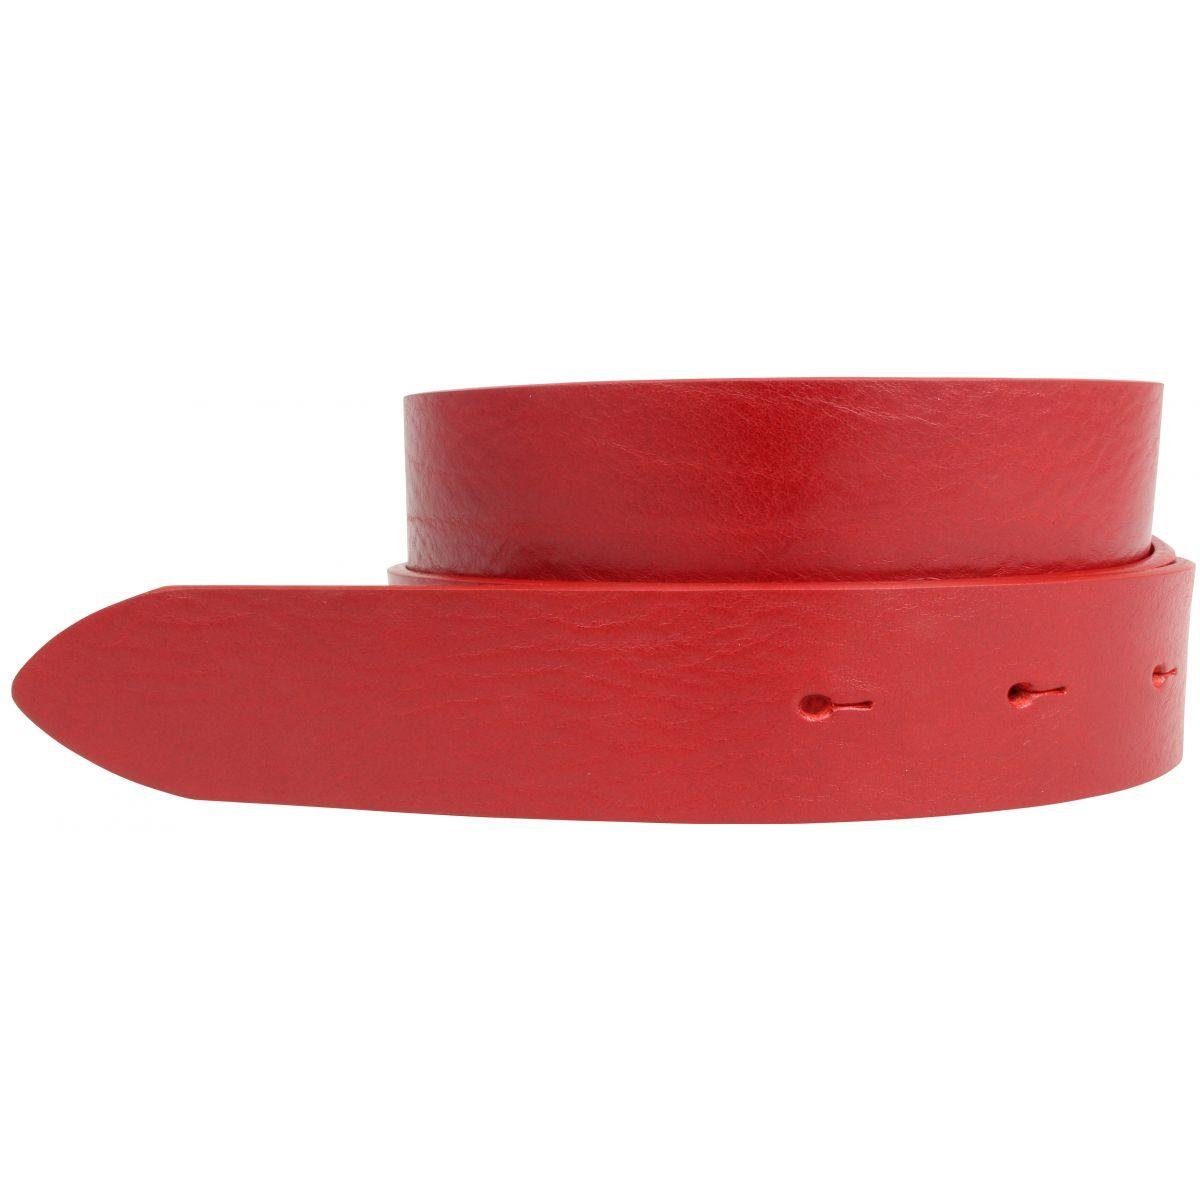 BELTINGER Ledergürtel Wechselgürtel aus Vollrindleder ohne Schnalle 3 cm - Druckknopf-Gürtel Rot